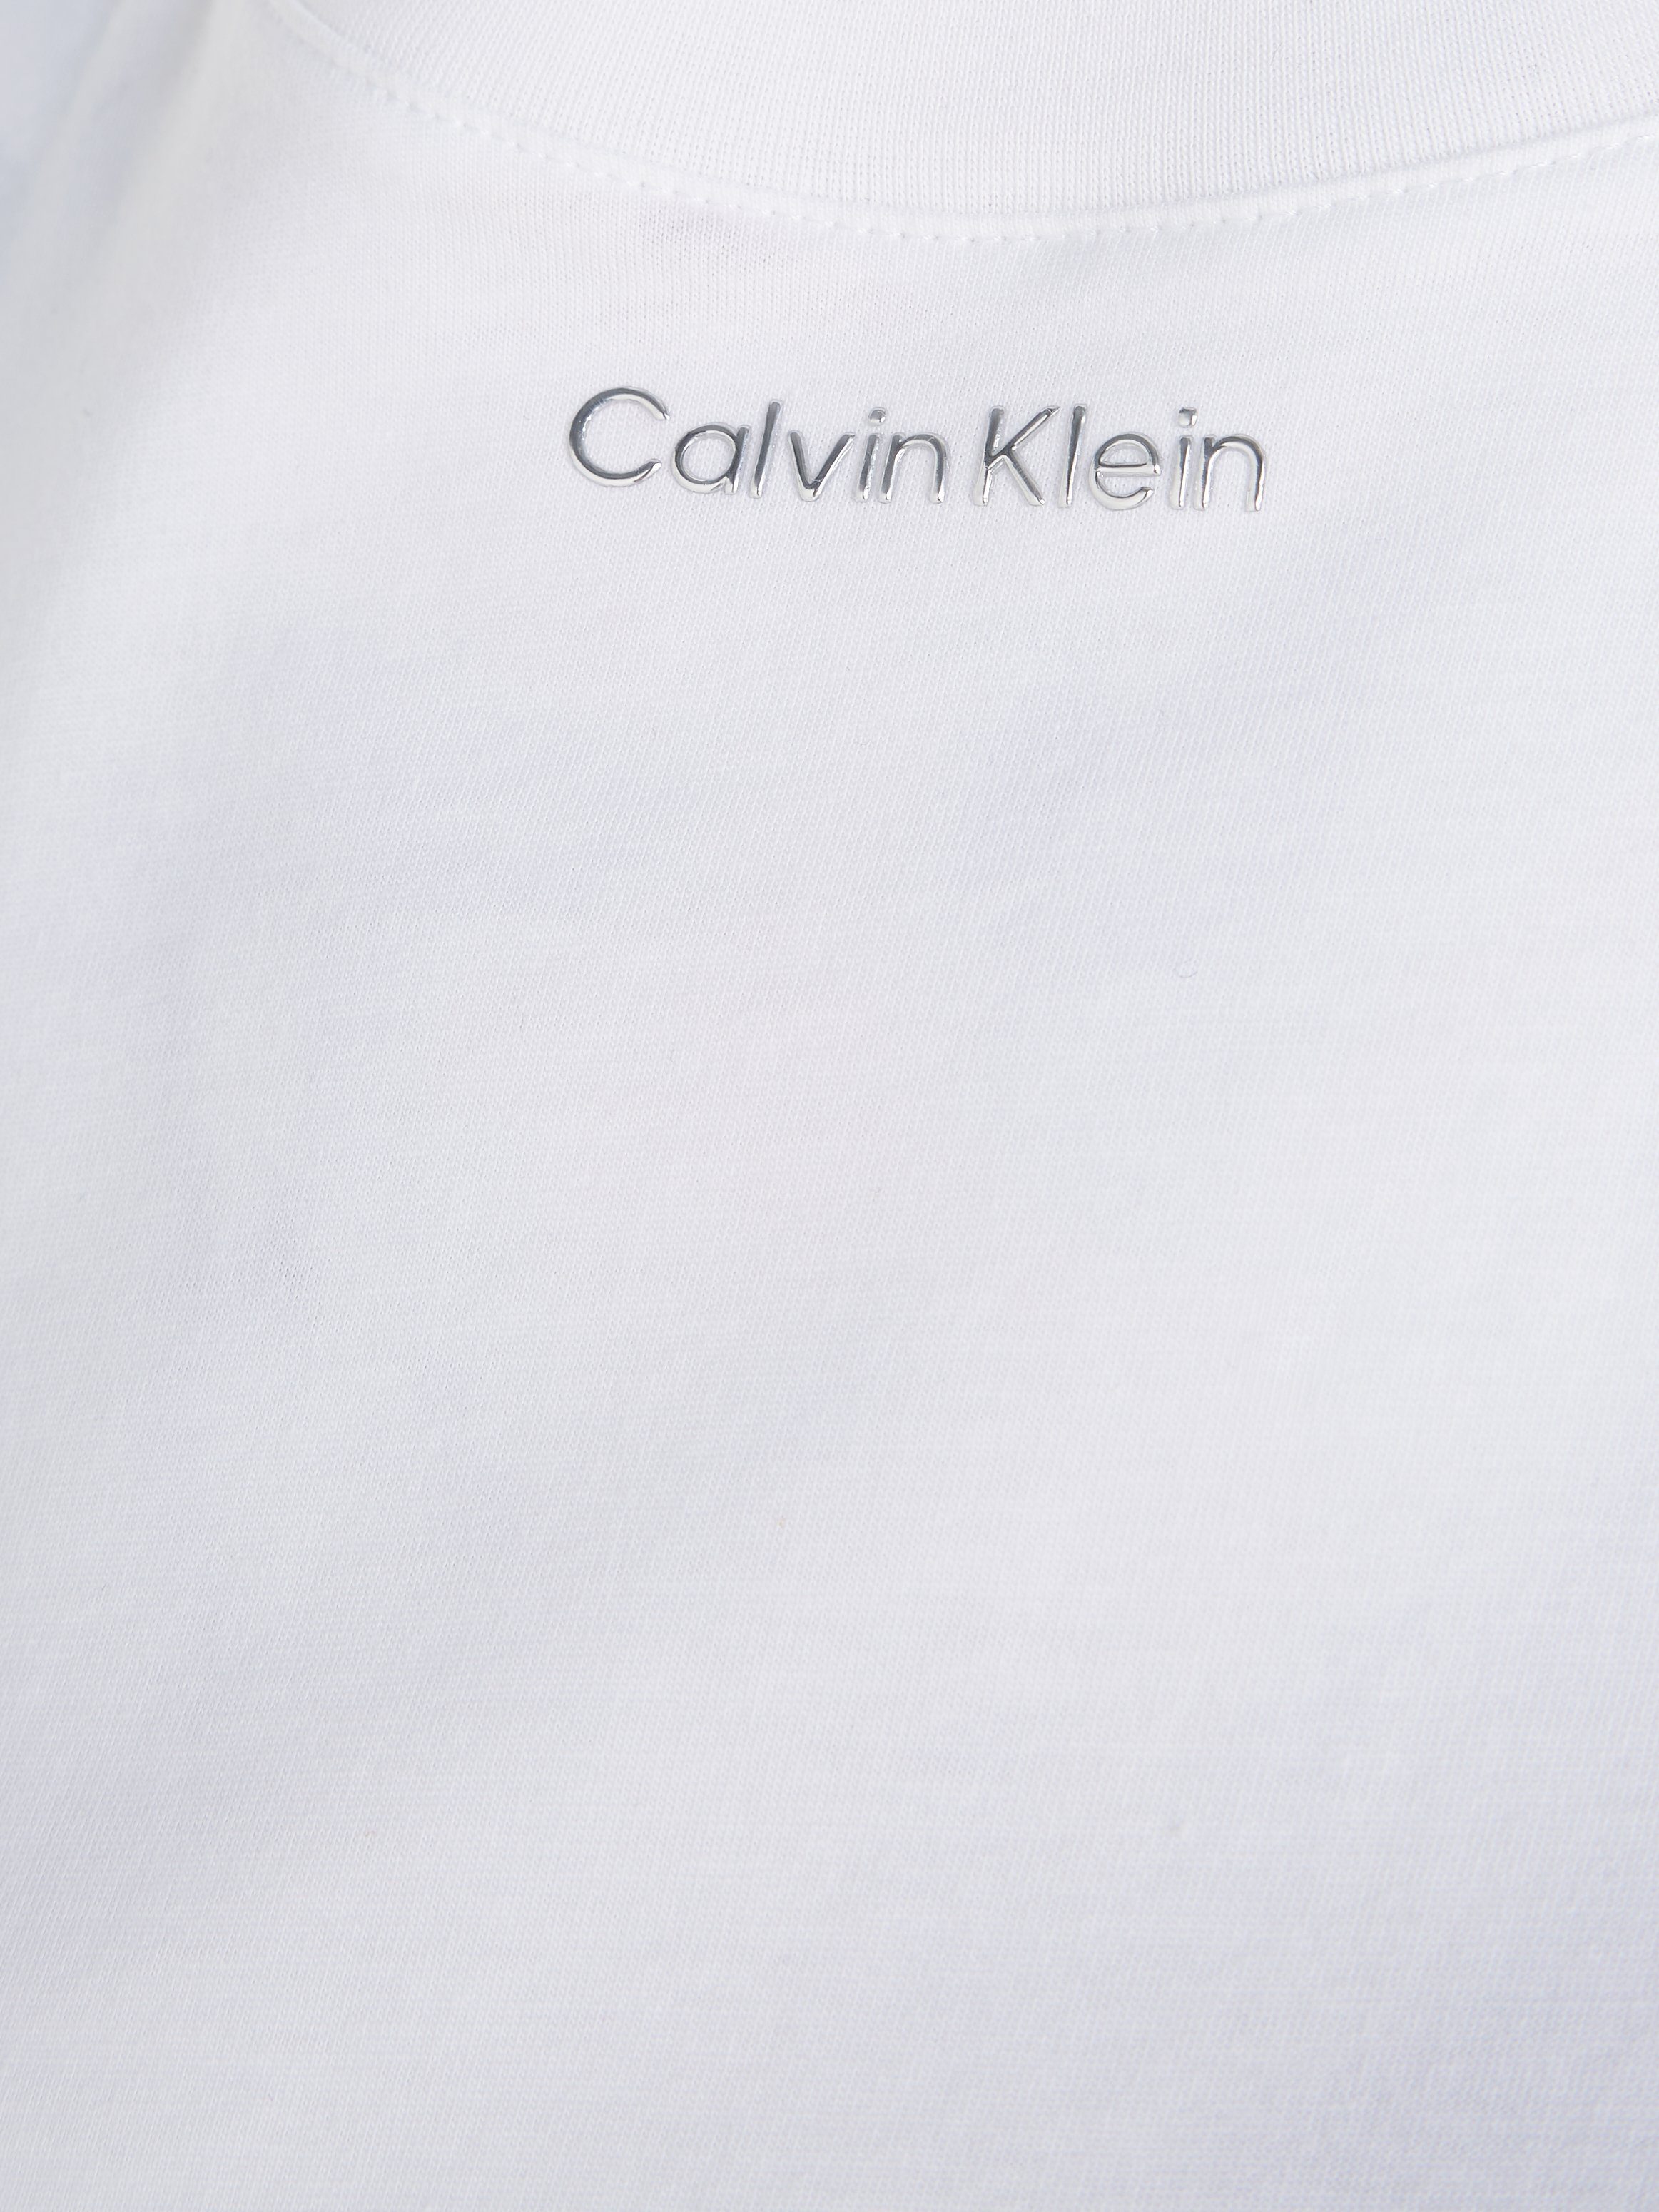 T-Shirt SHIRT White METALLIC LOGO Calvin MICRO T Klein Bright